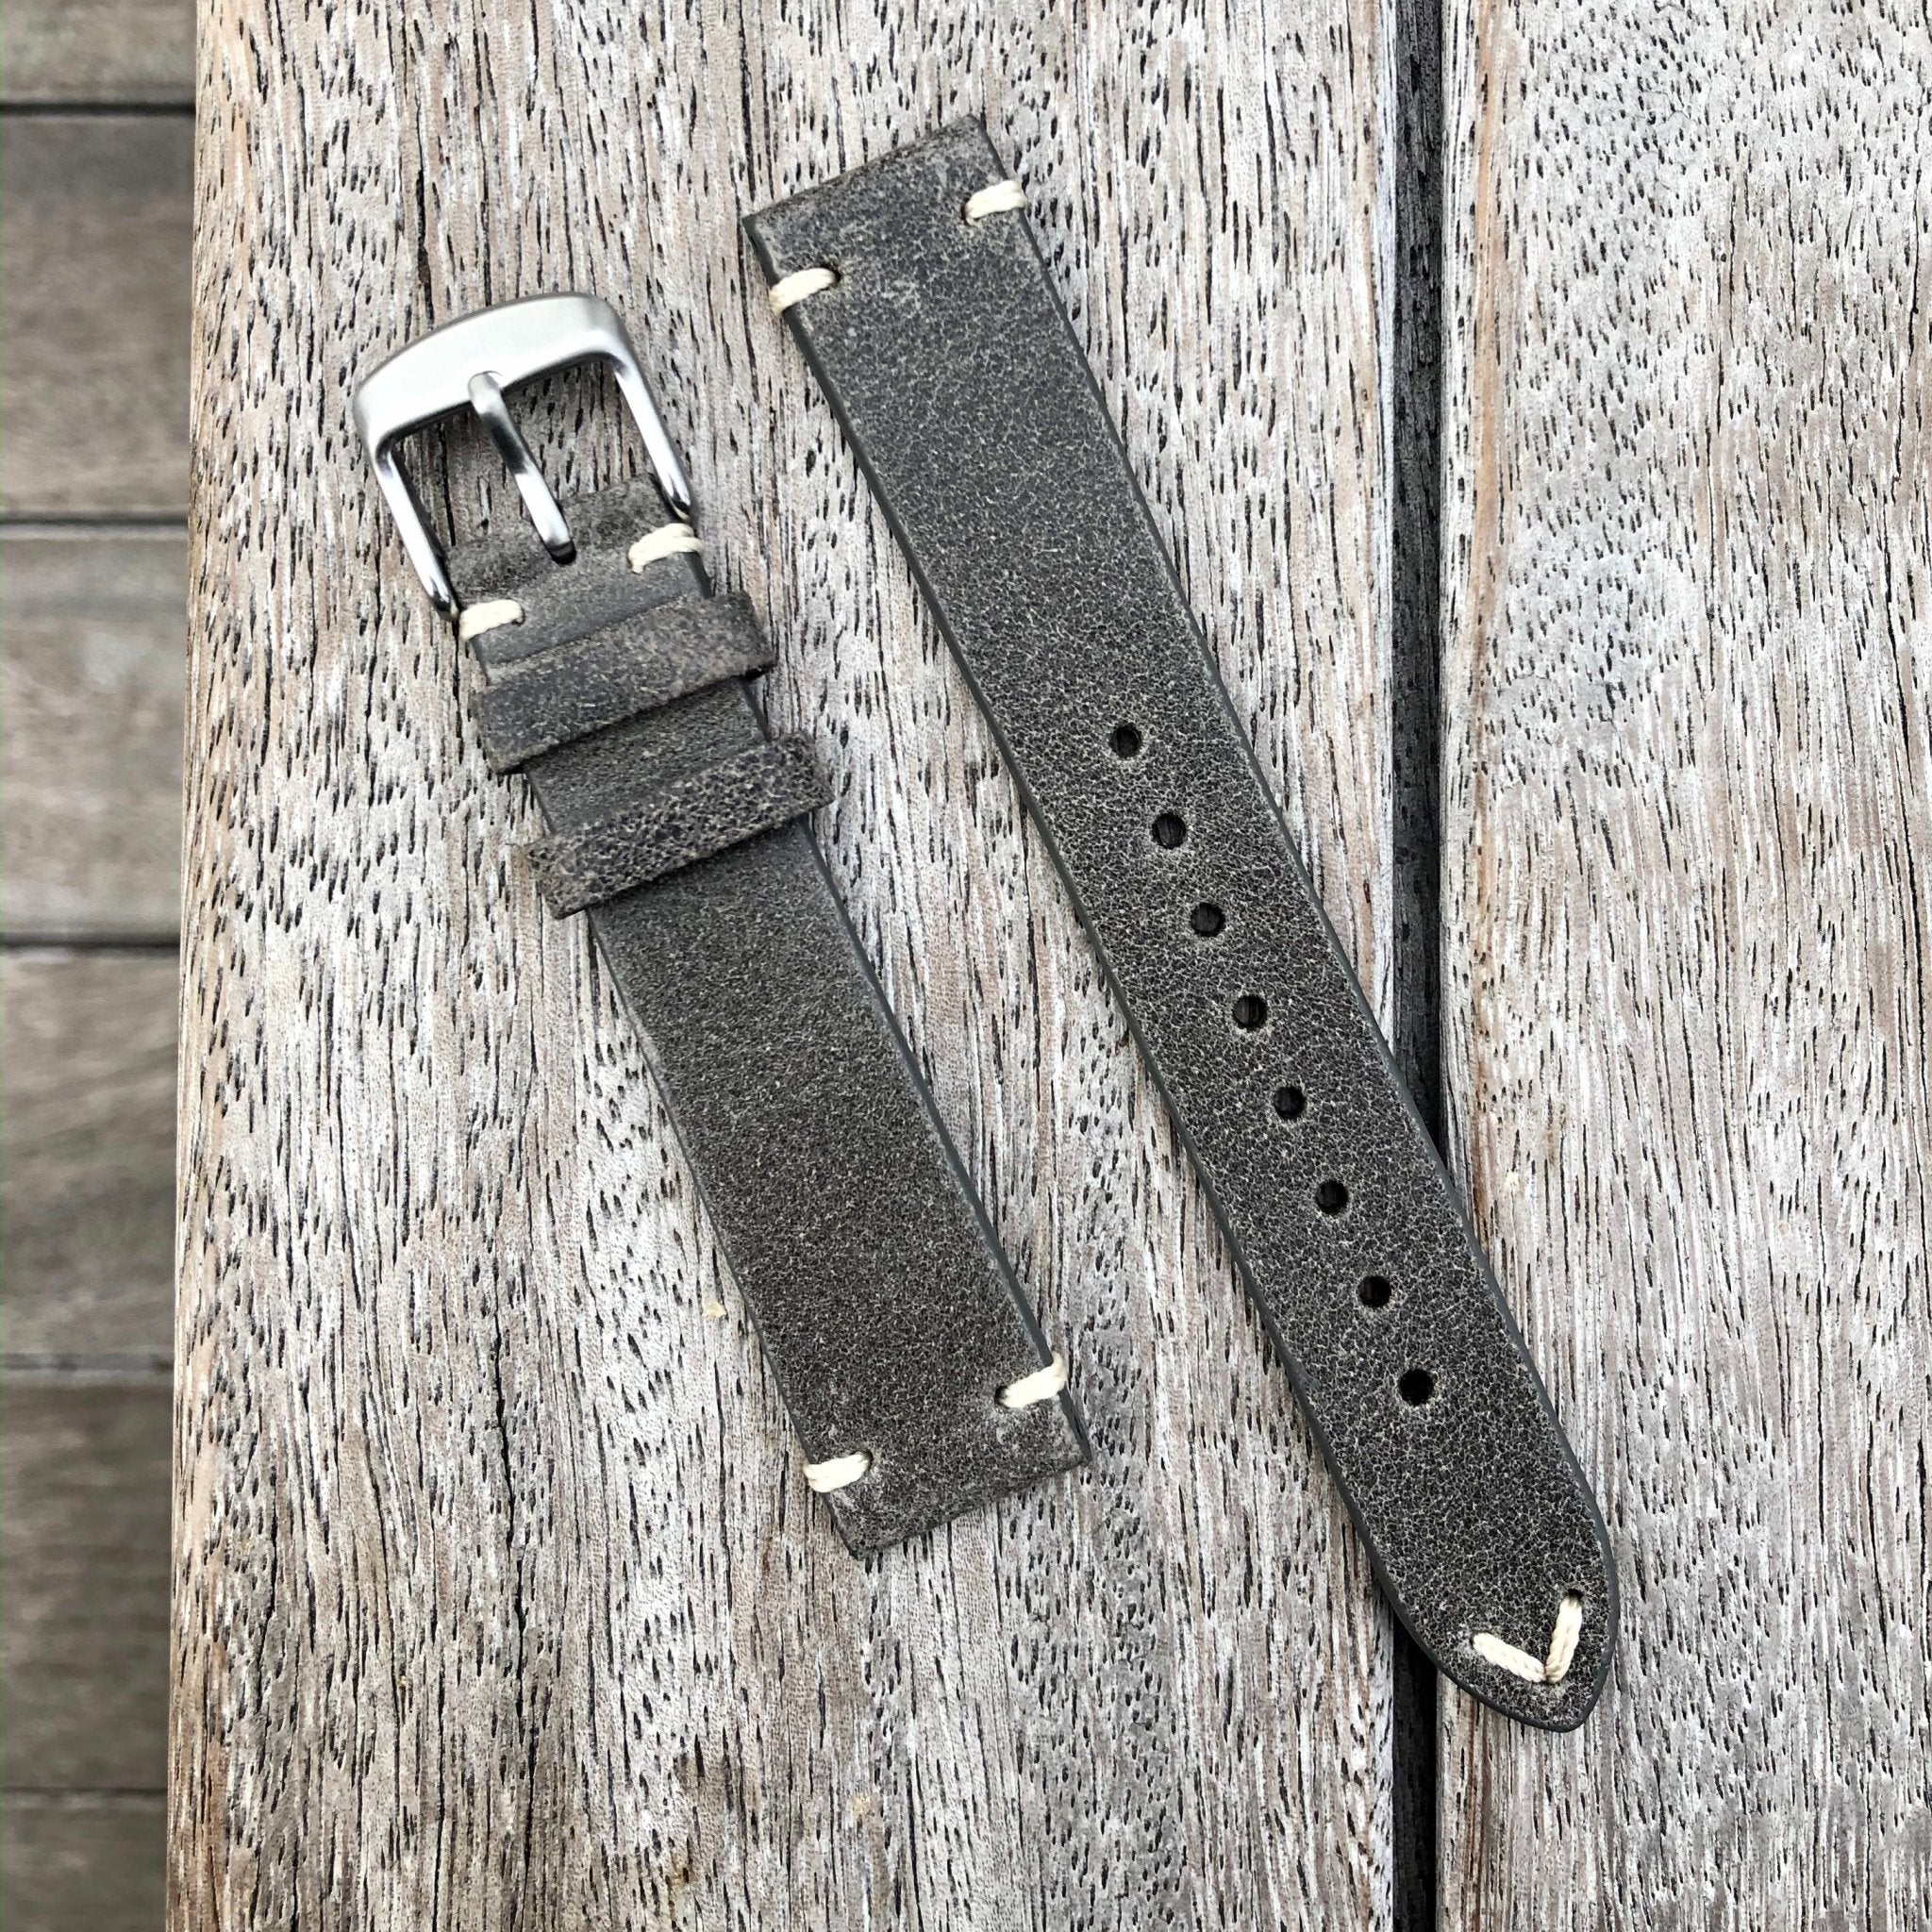 Dimgrey | Heritage Italian Calf Leather Watch Strap - Samurai Vintage Co.